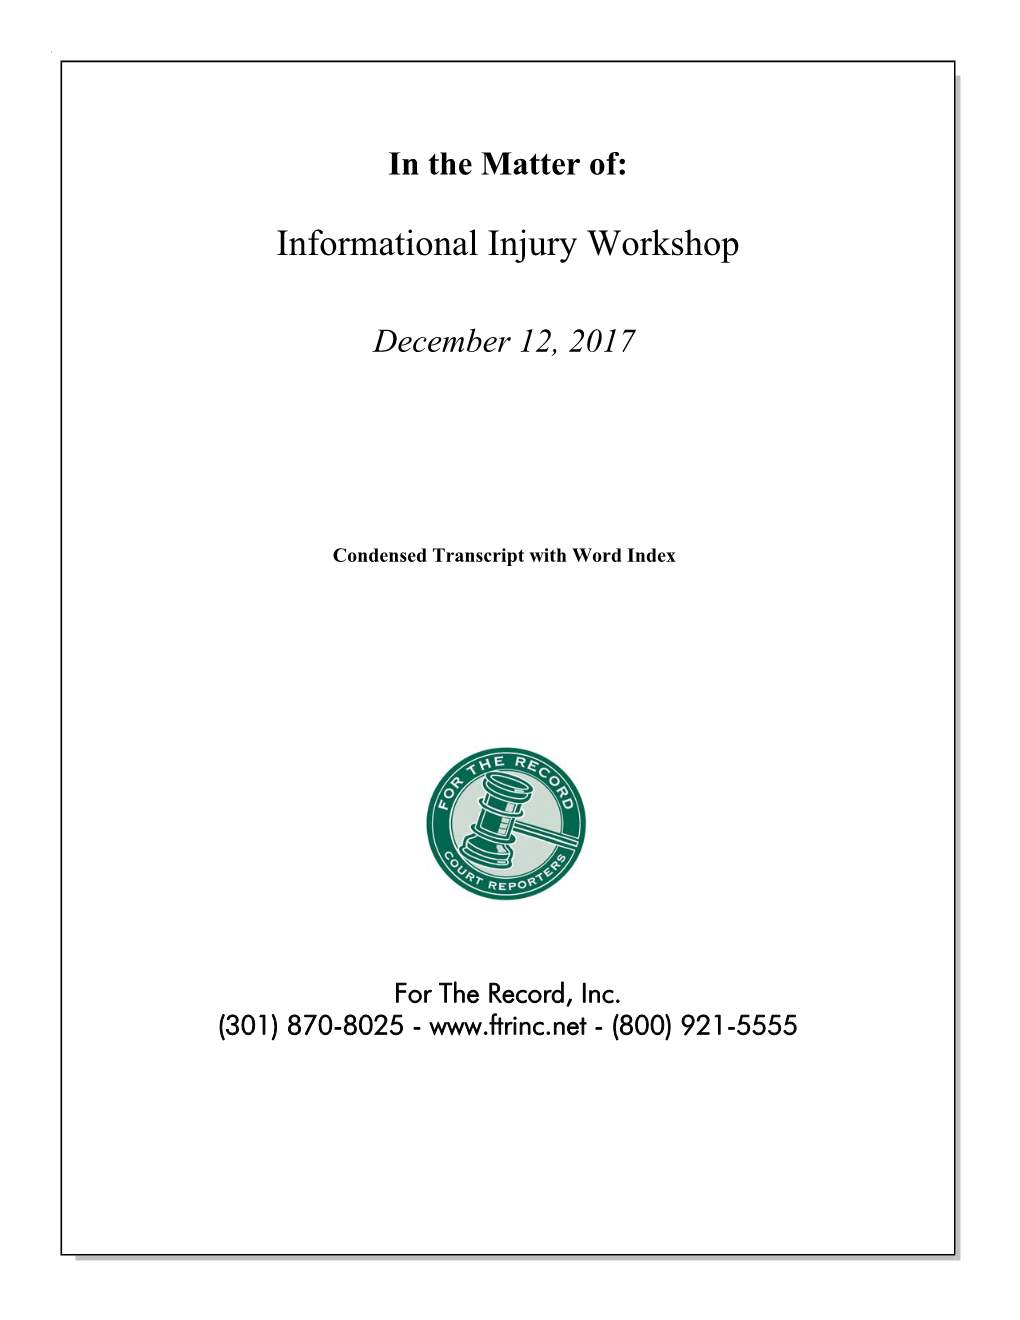 FTC Informational Injury Workshop, December 12, 2017